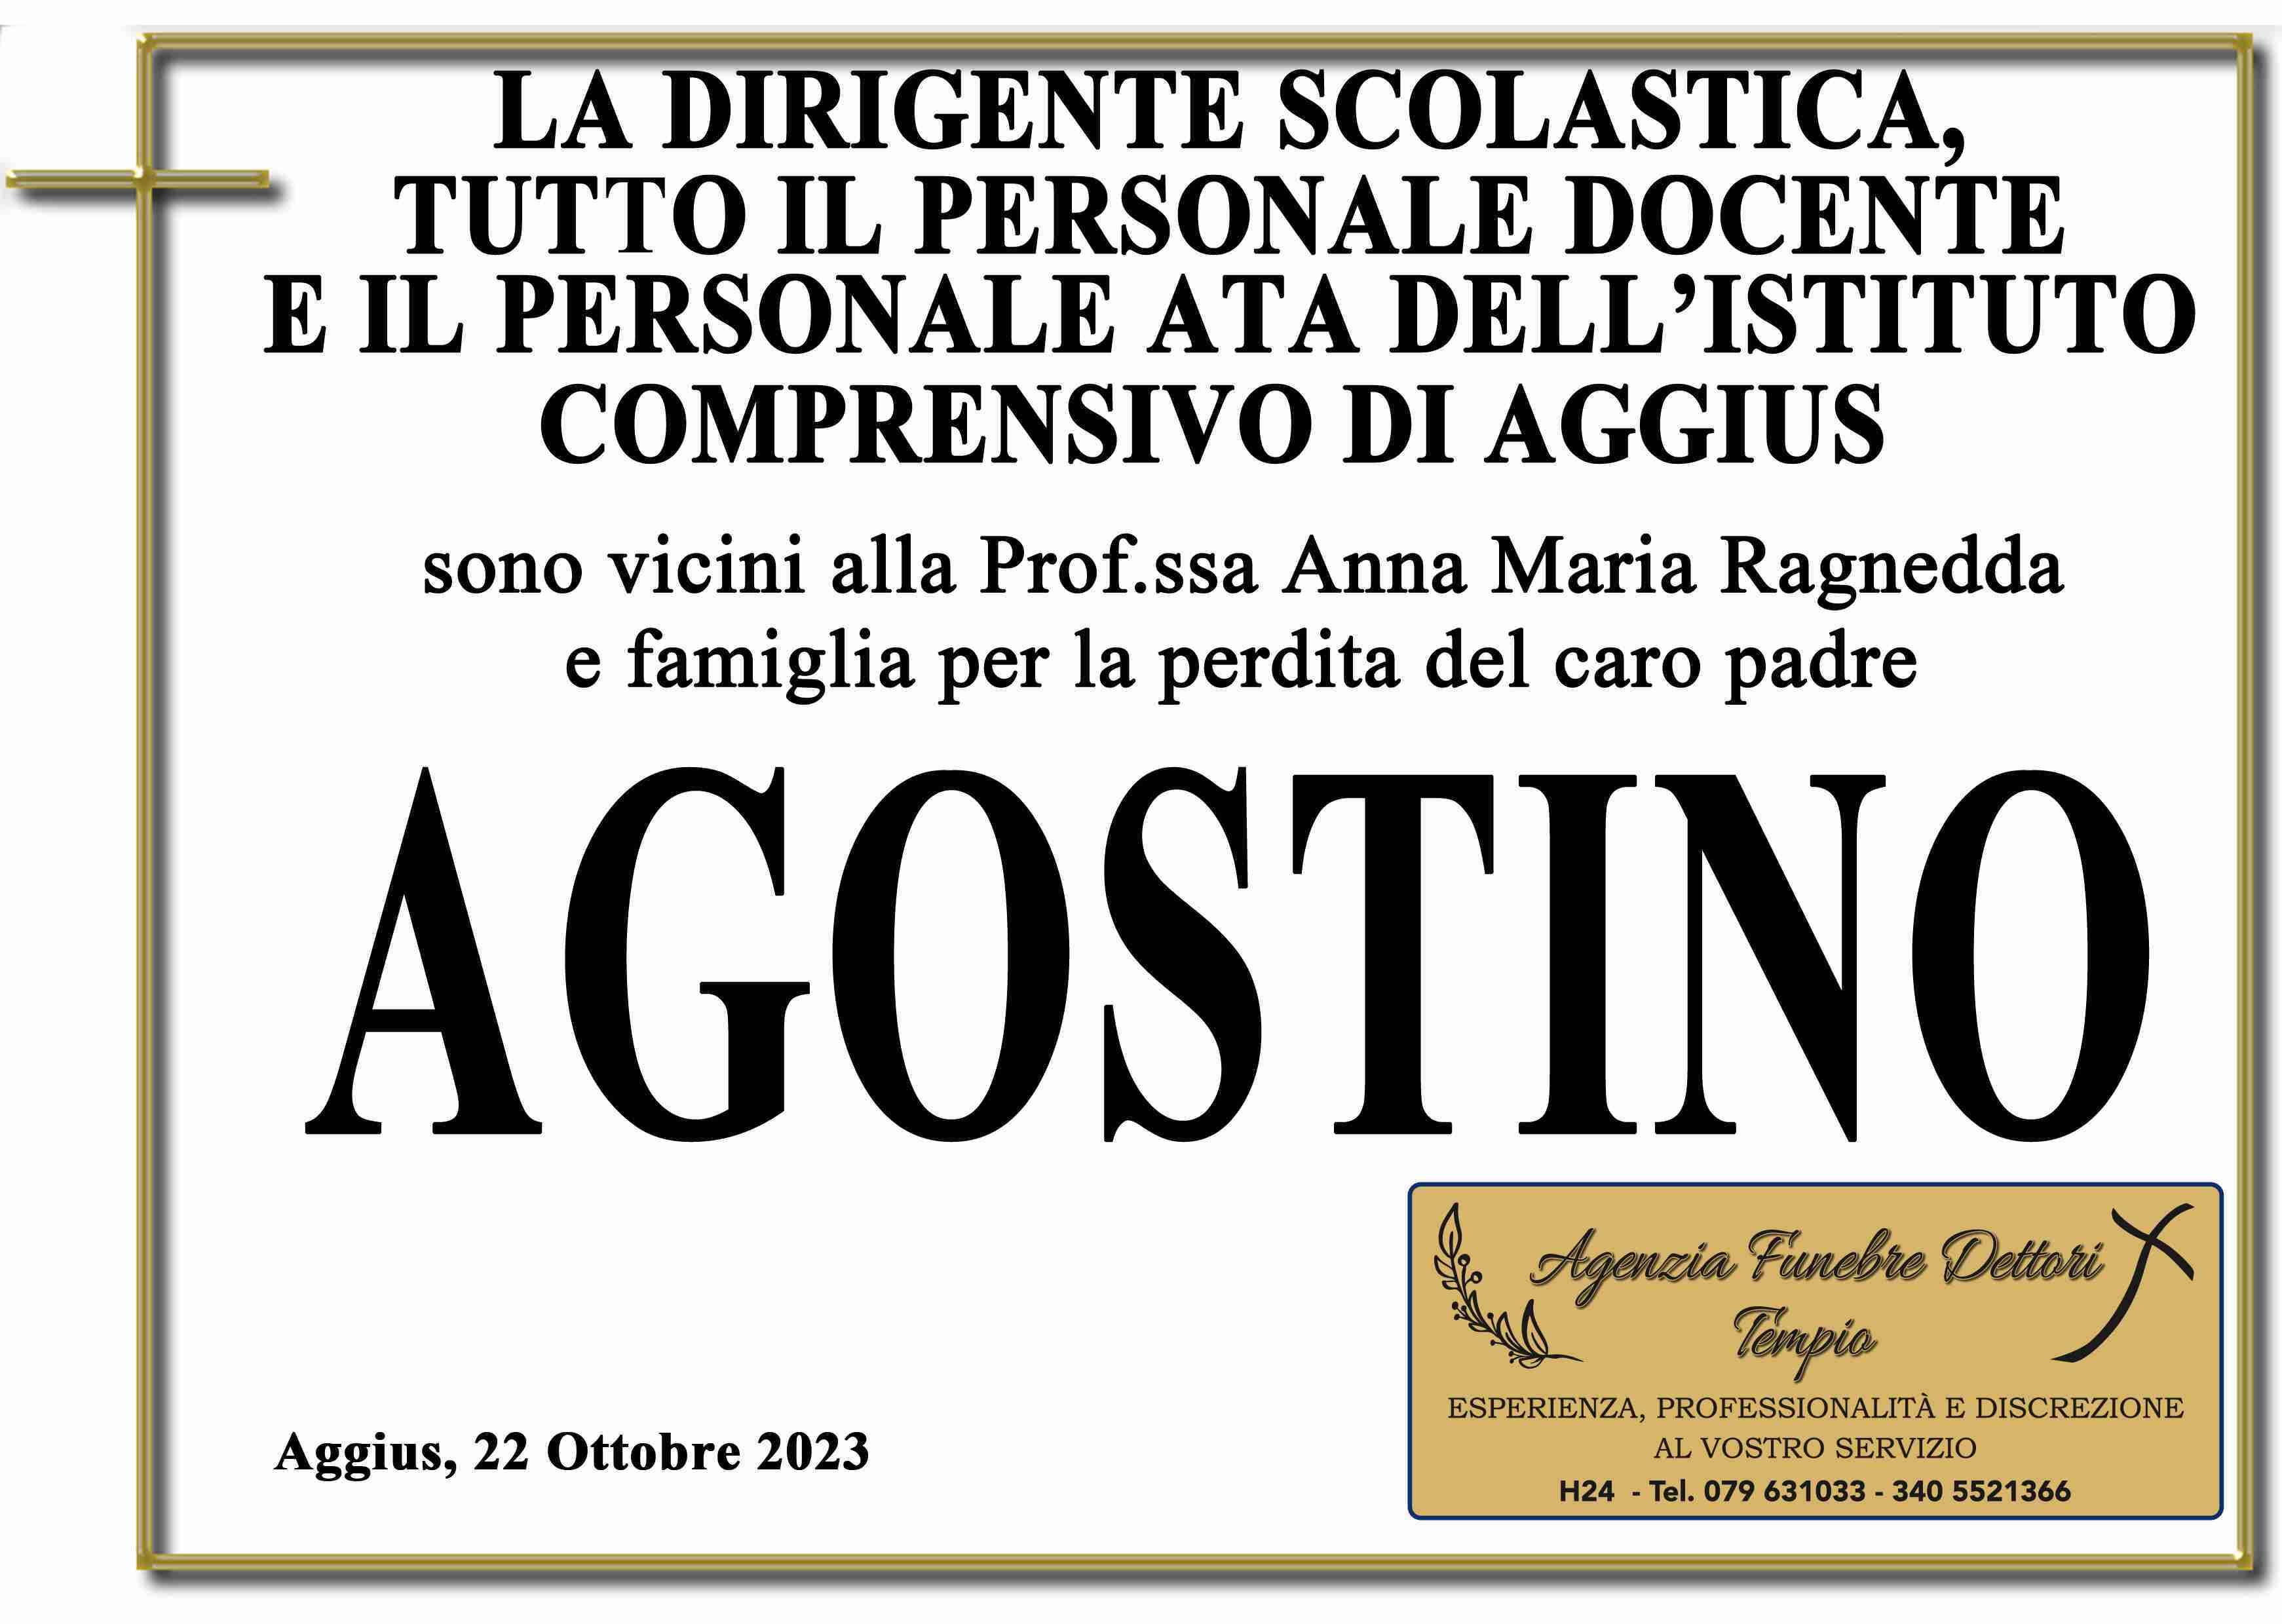 Agostino Ragnedda